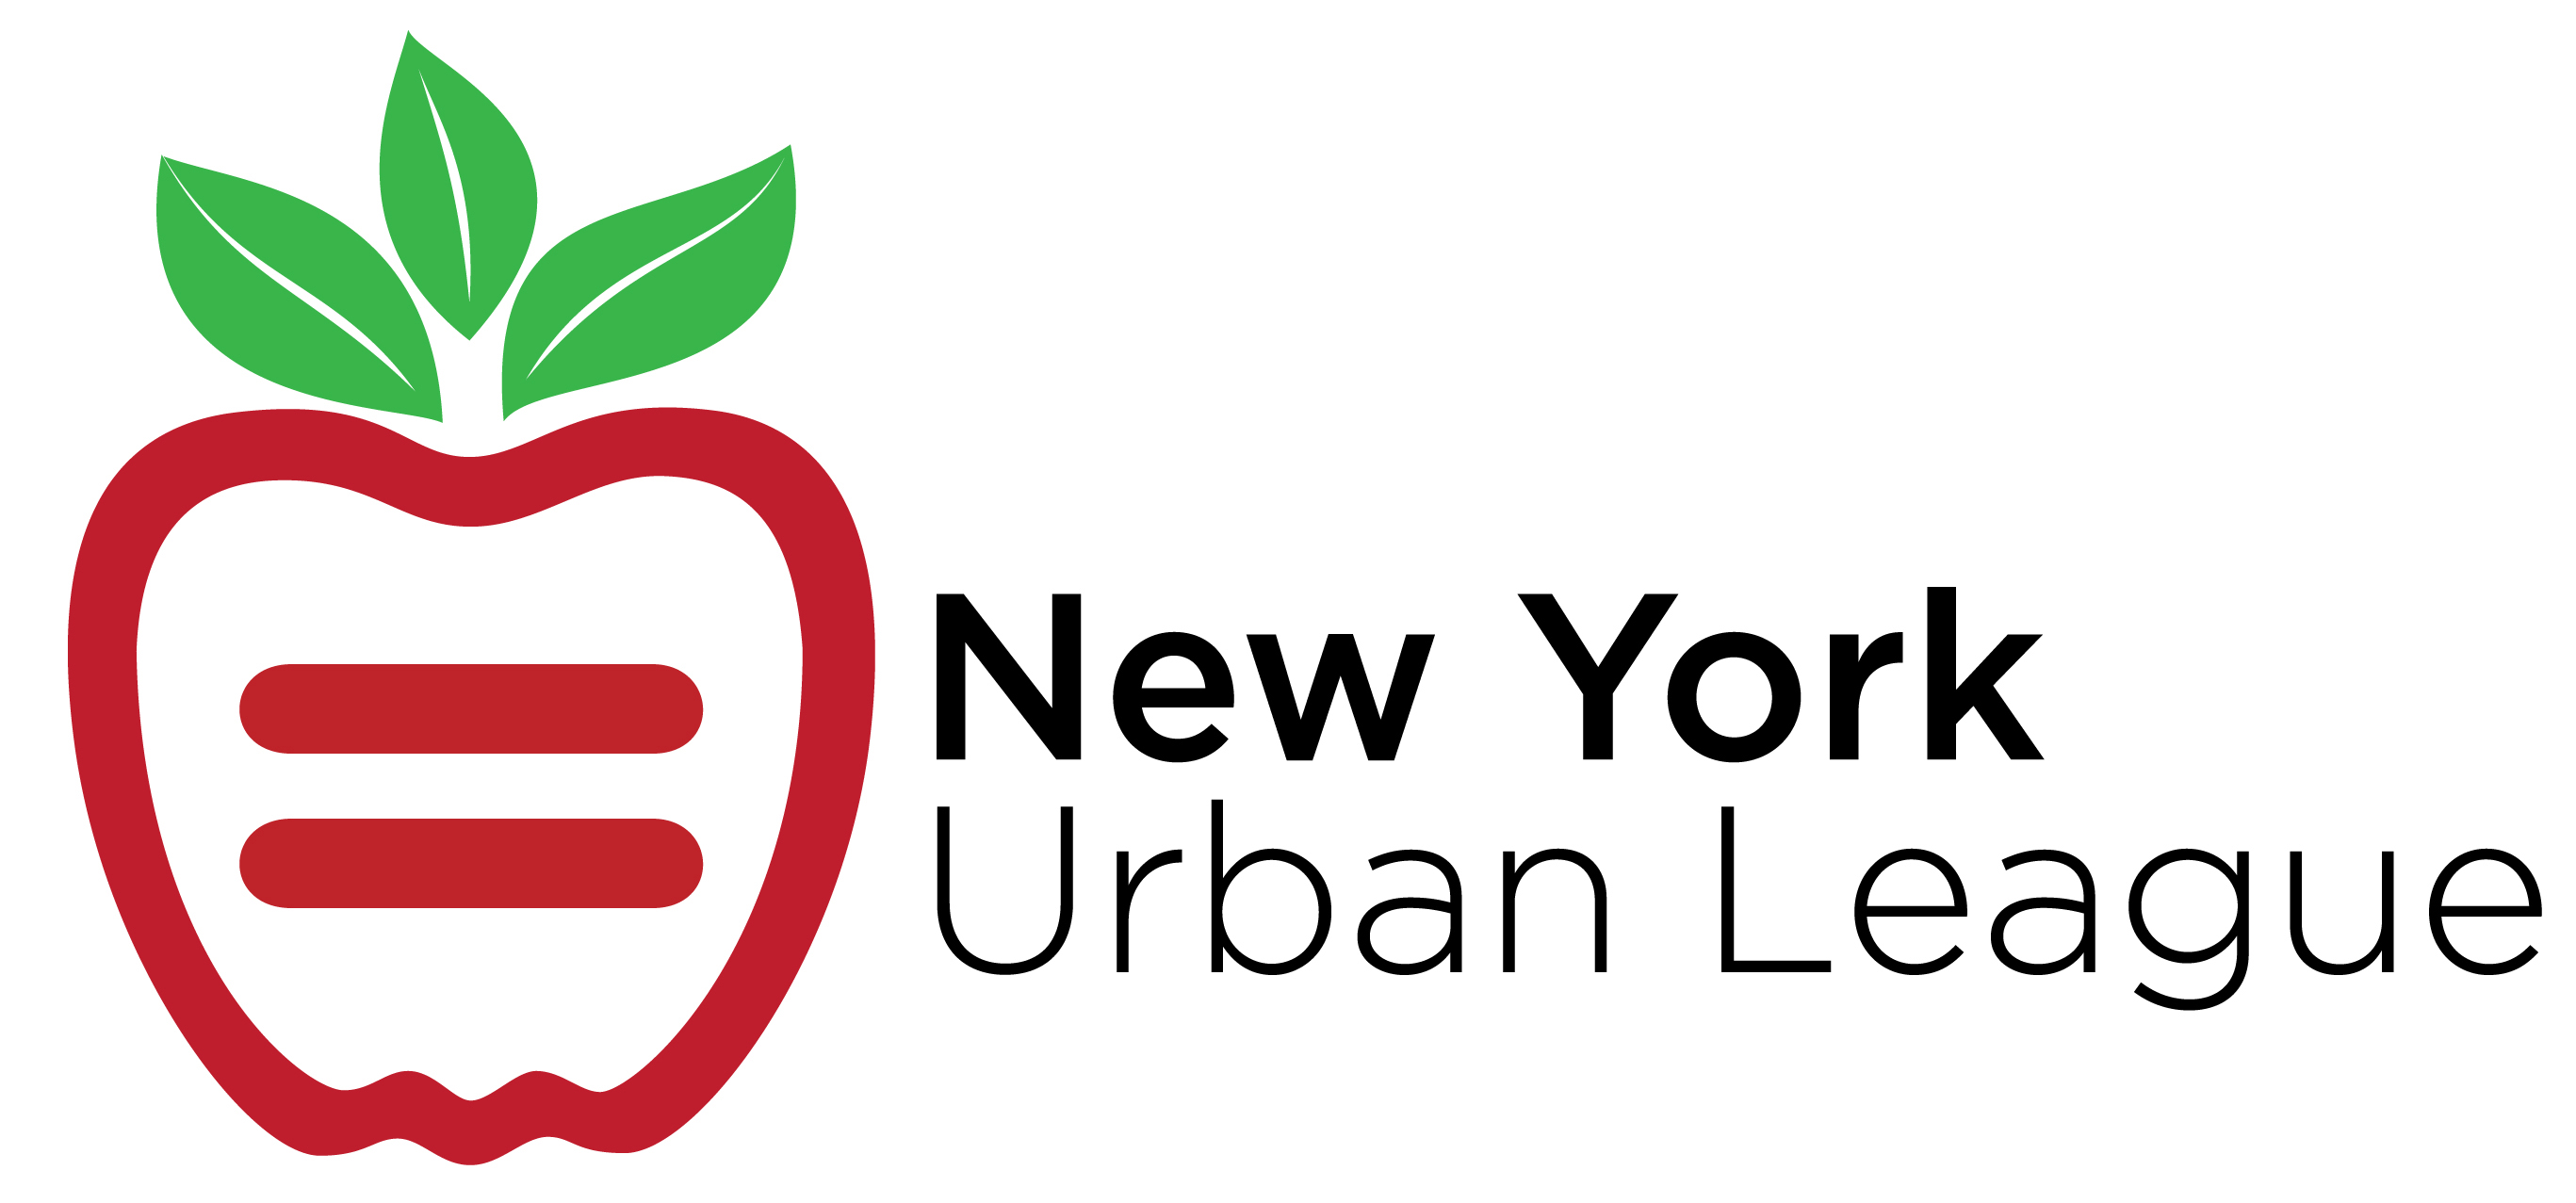 New York Urban League logo